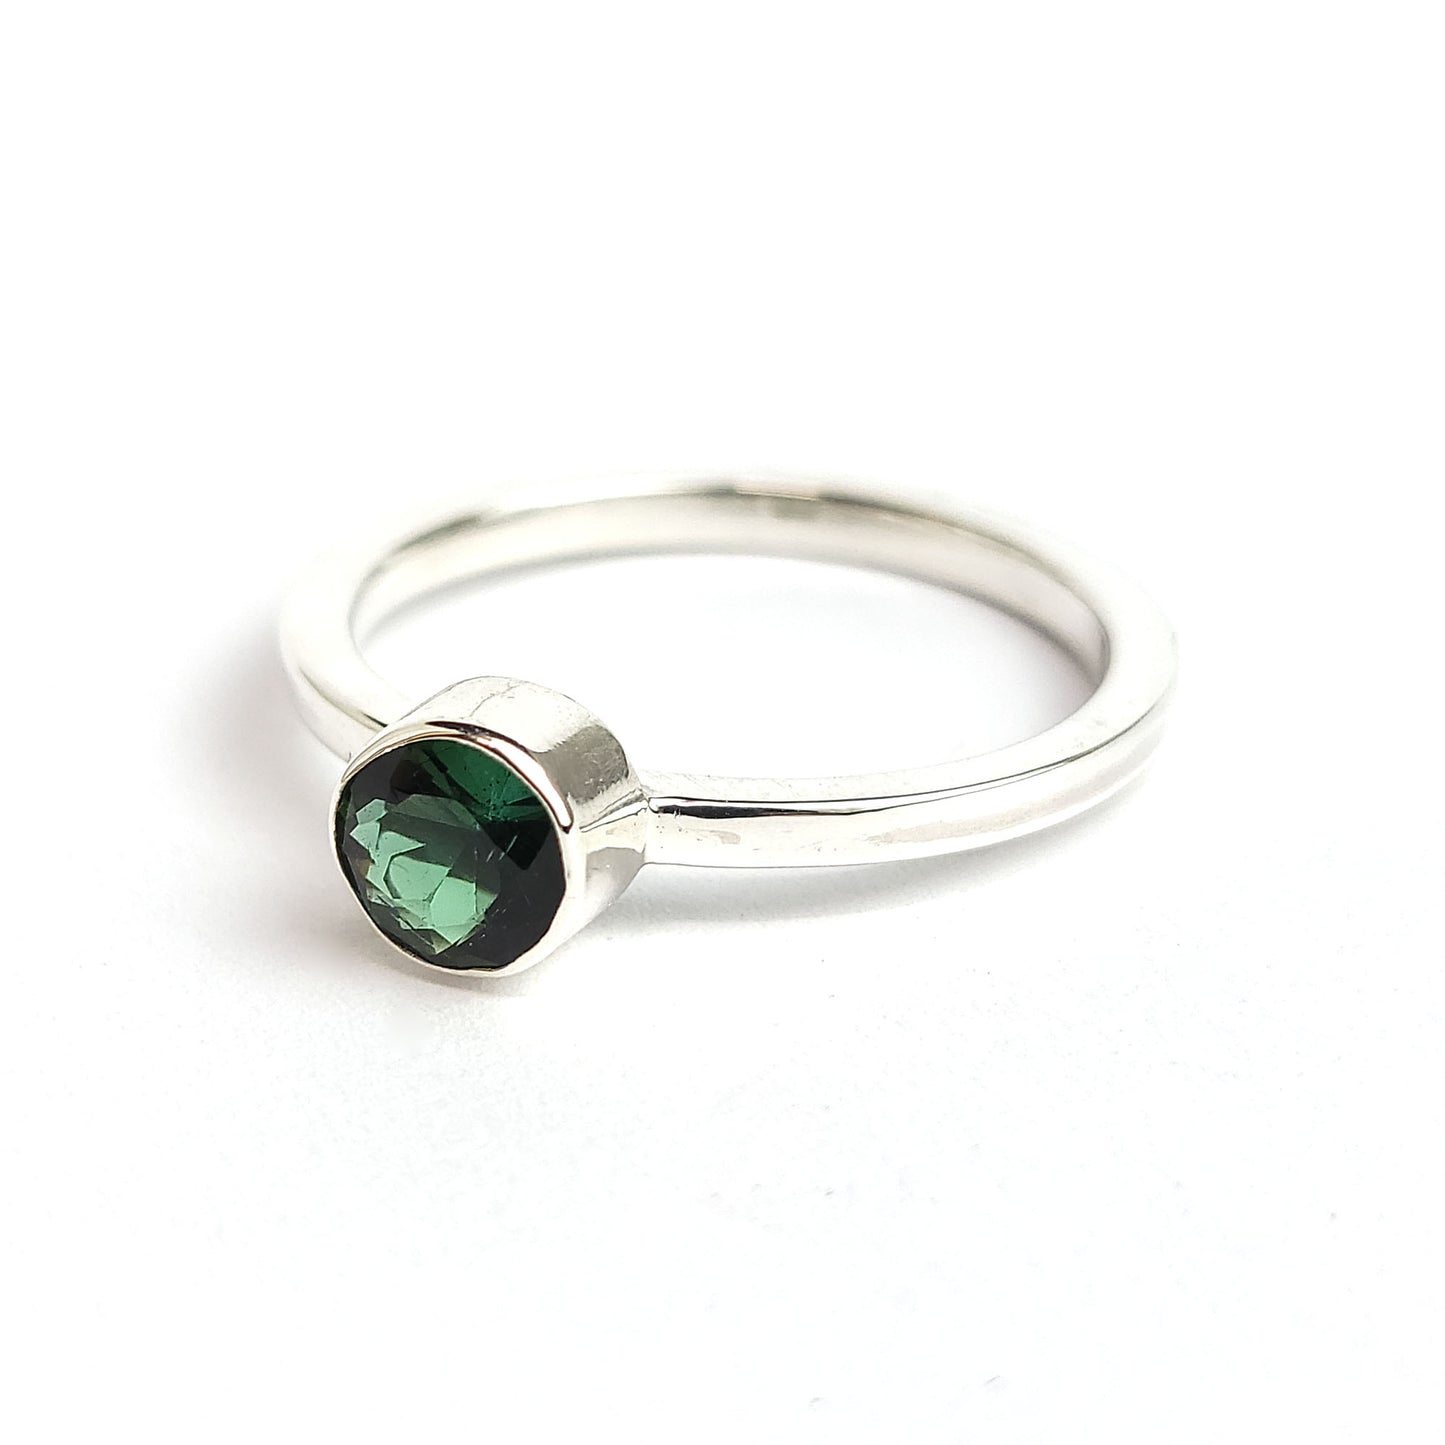 Bezel Sterling Silver Ring - green tourmaline